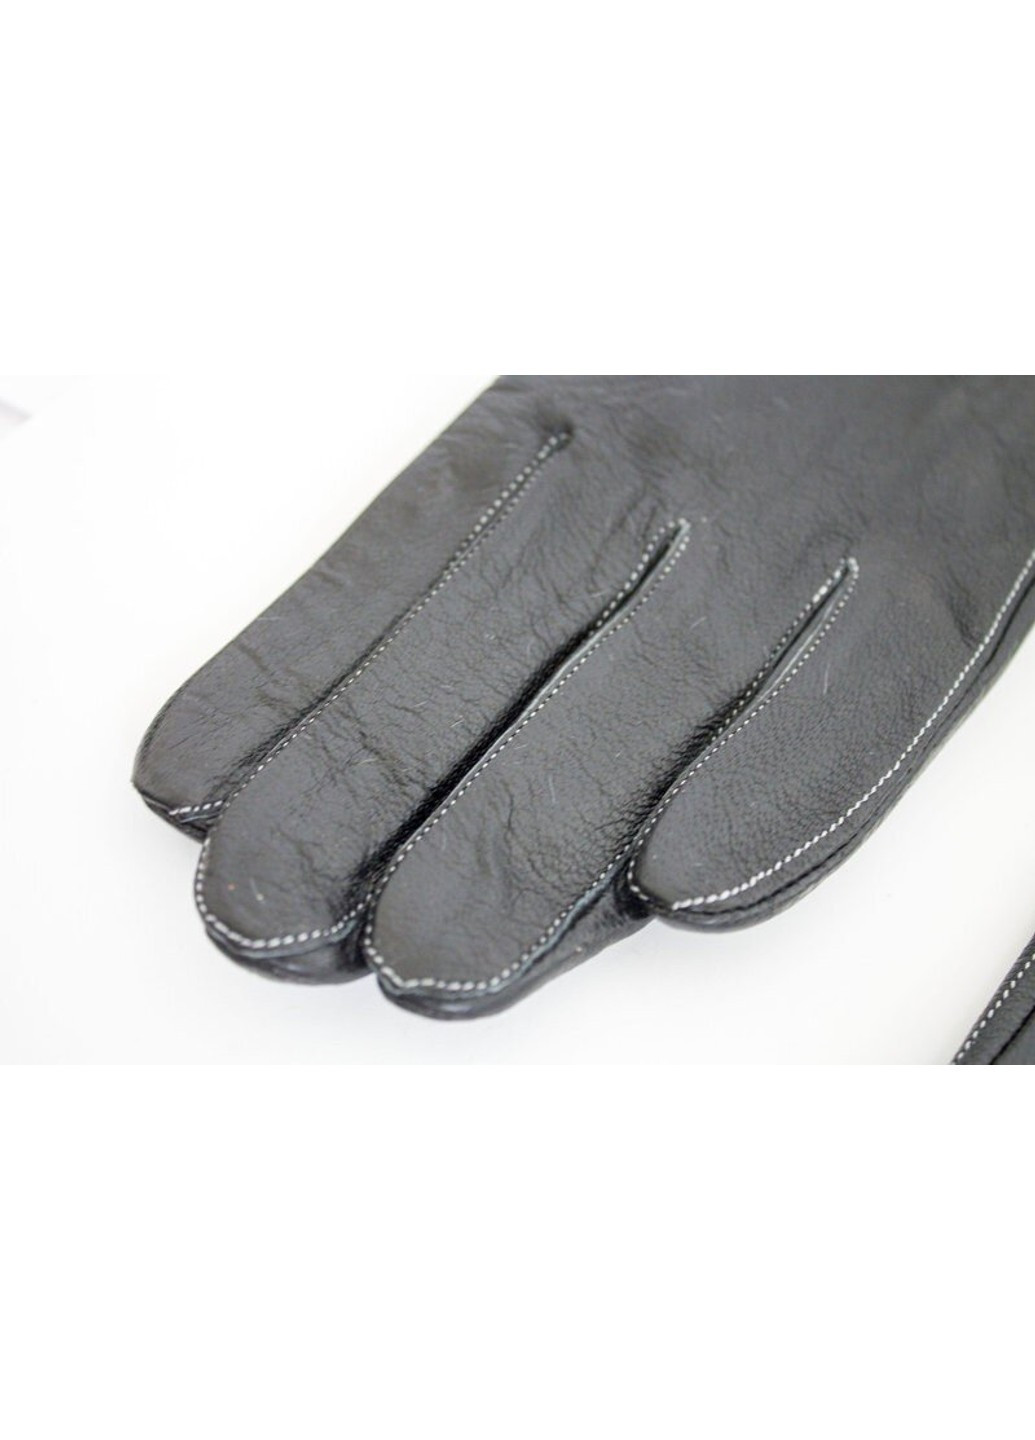 Женские перчатки 395 Shust Gloves (266143775)